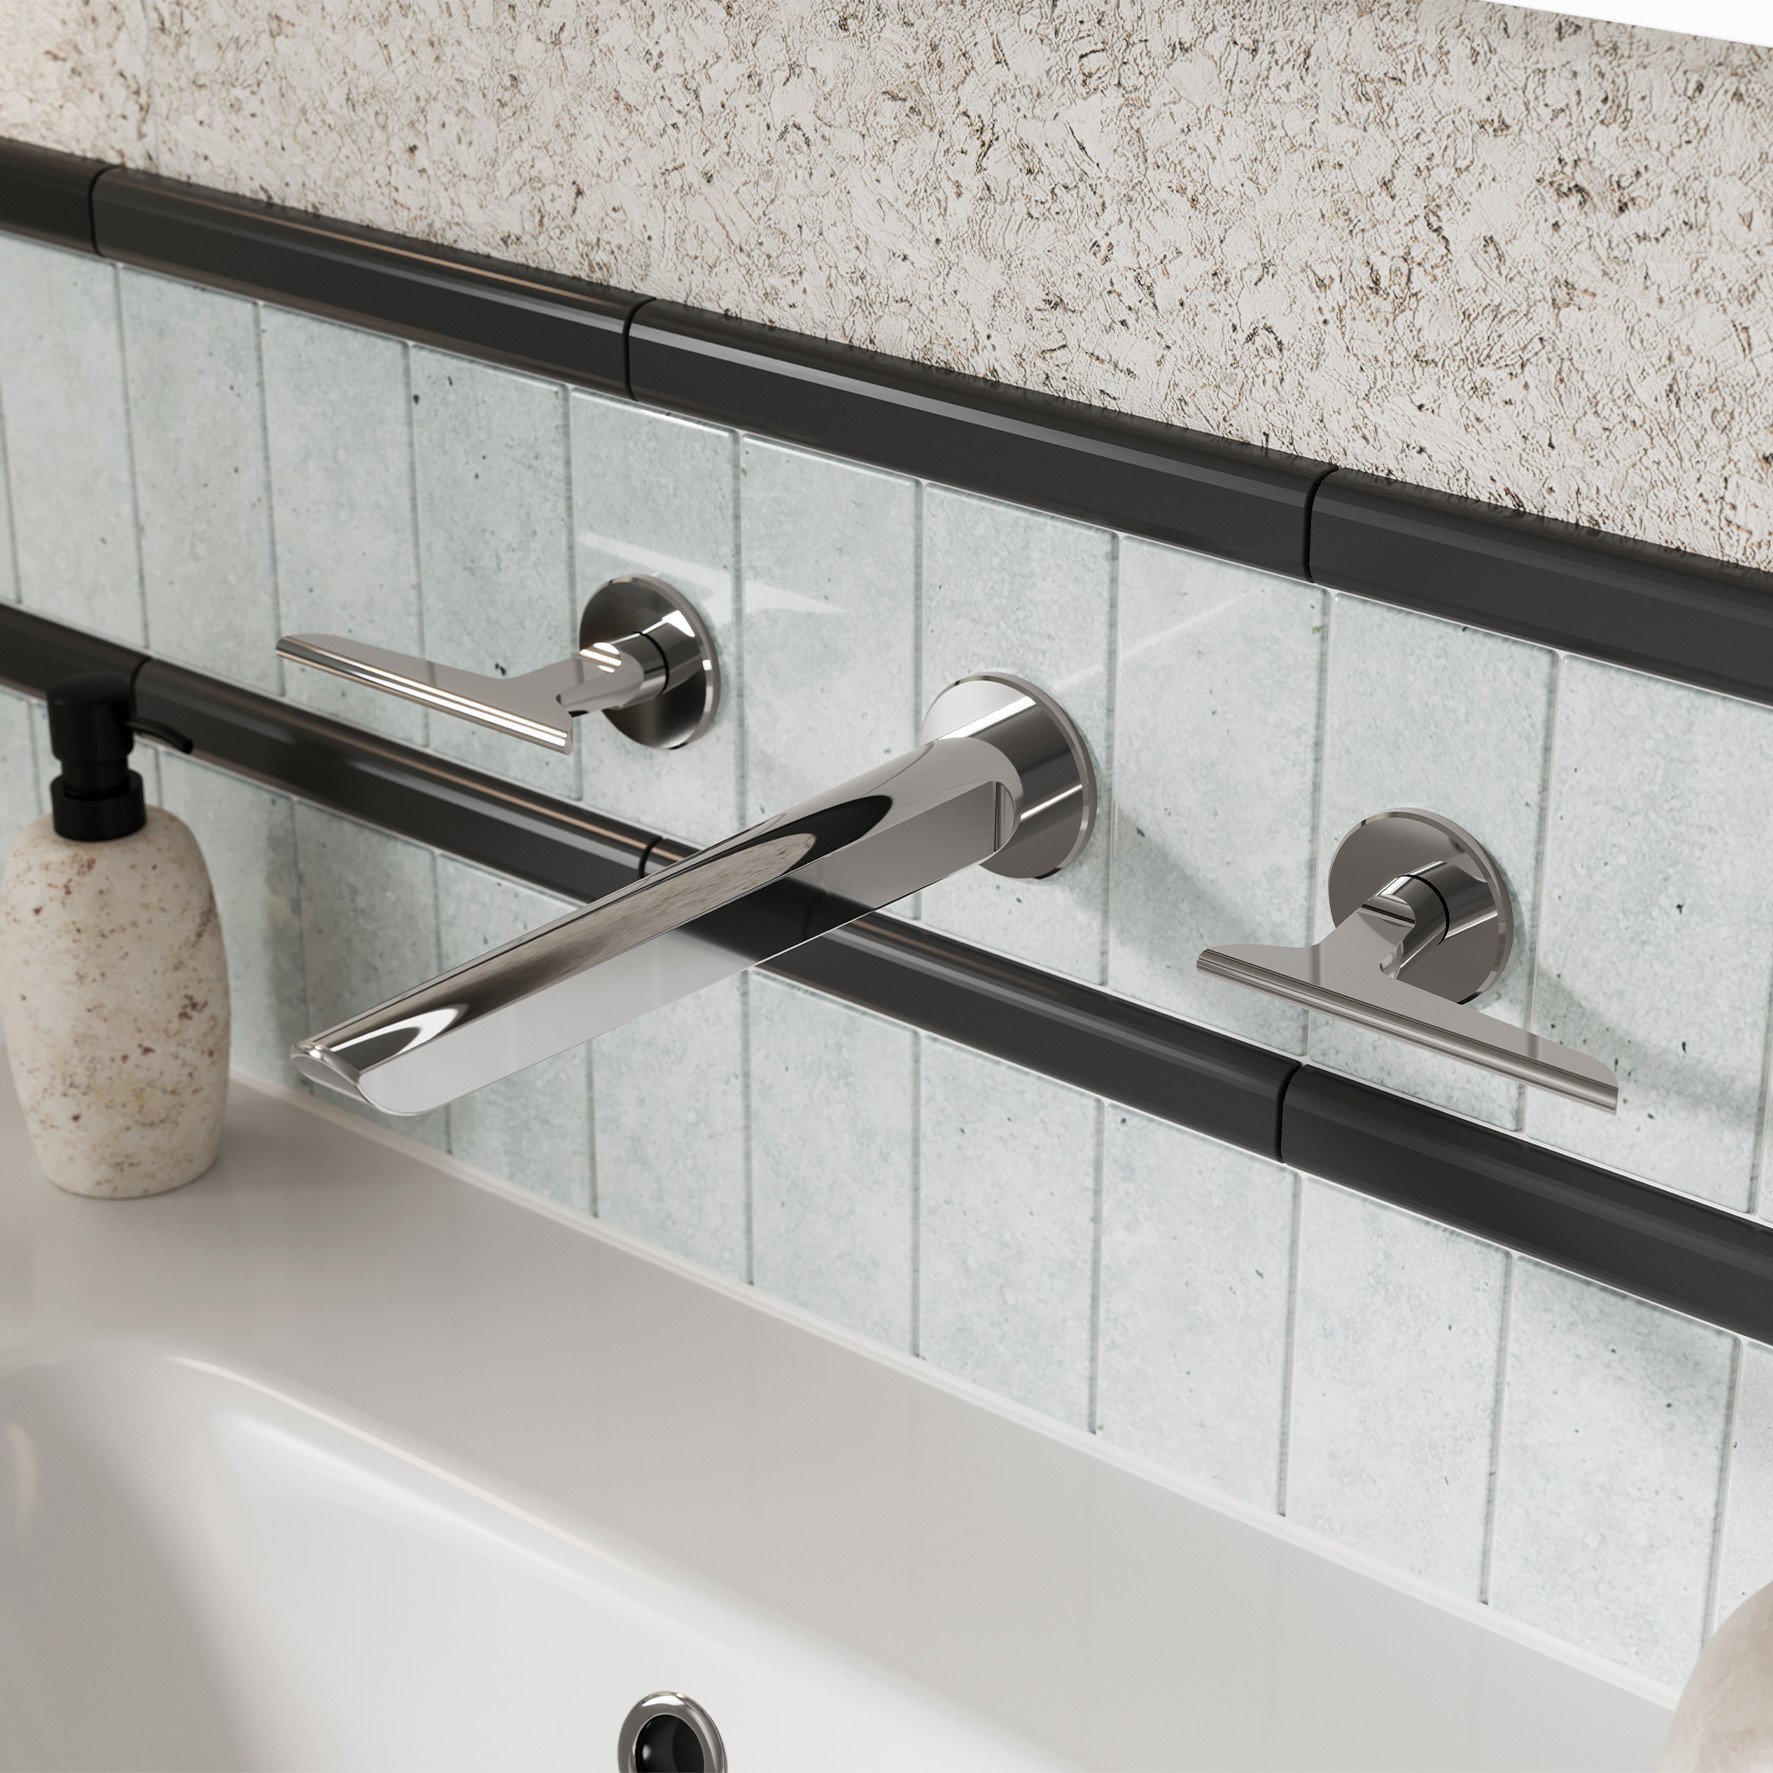 The epitome of luxury bathroom brassware design, FOILE provides a sleek, elegant appearance.